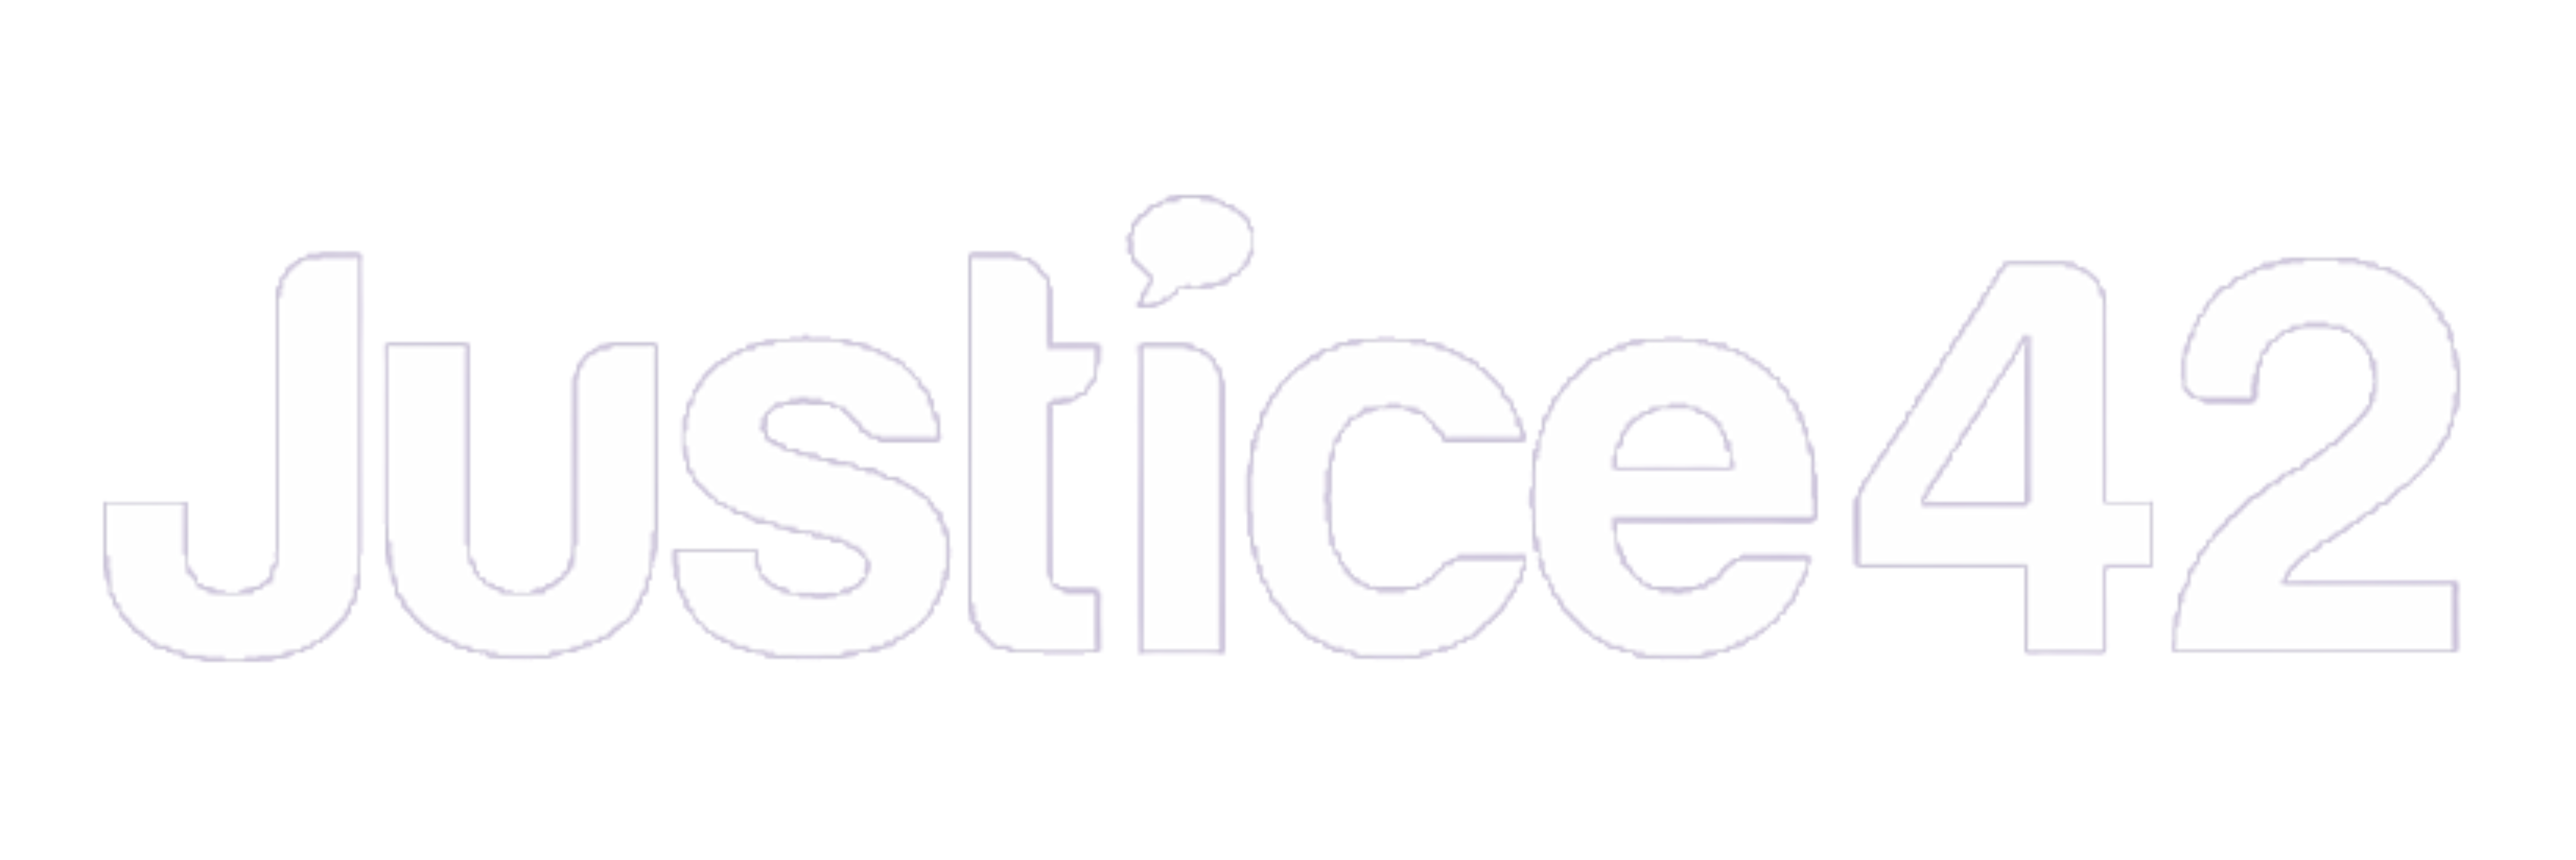 Justice42